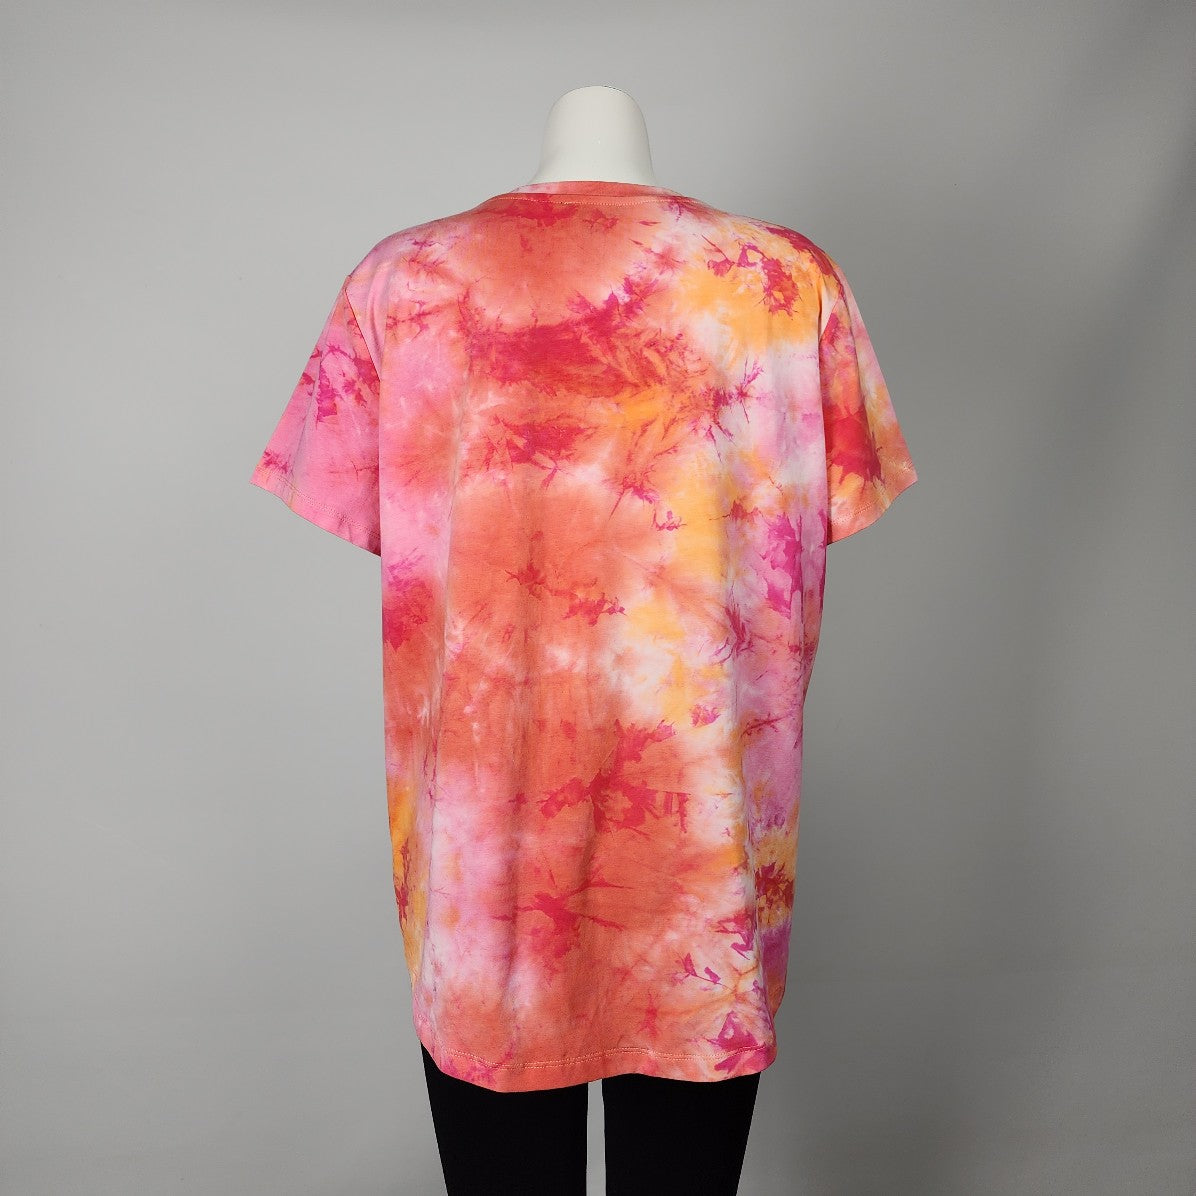 Tribal Pink Cotton Blend Tie Die T-Shirt Top Size XL